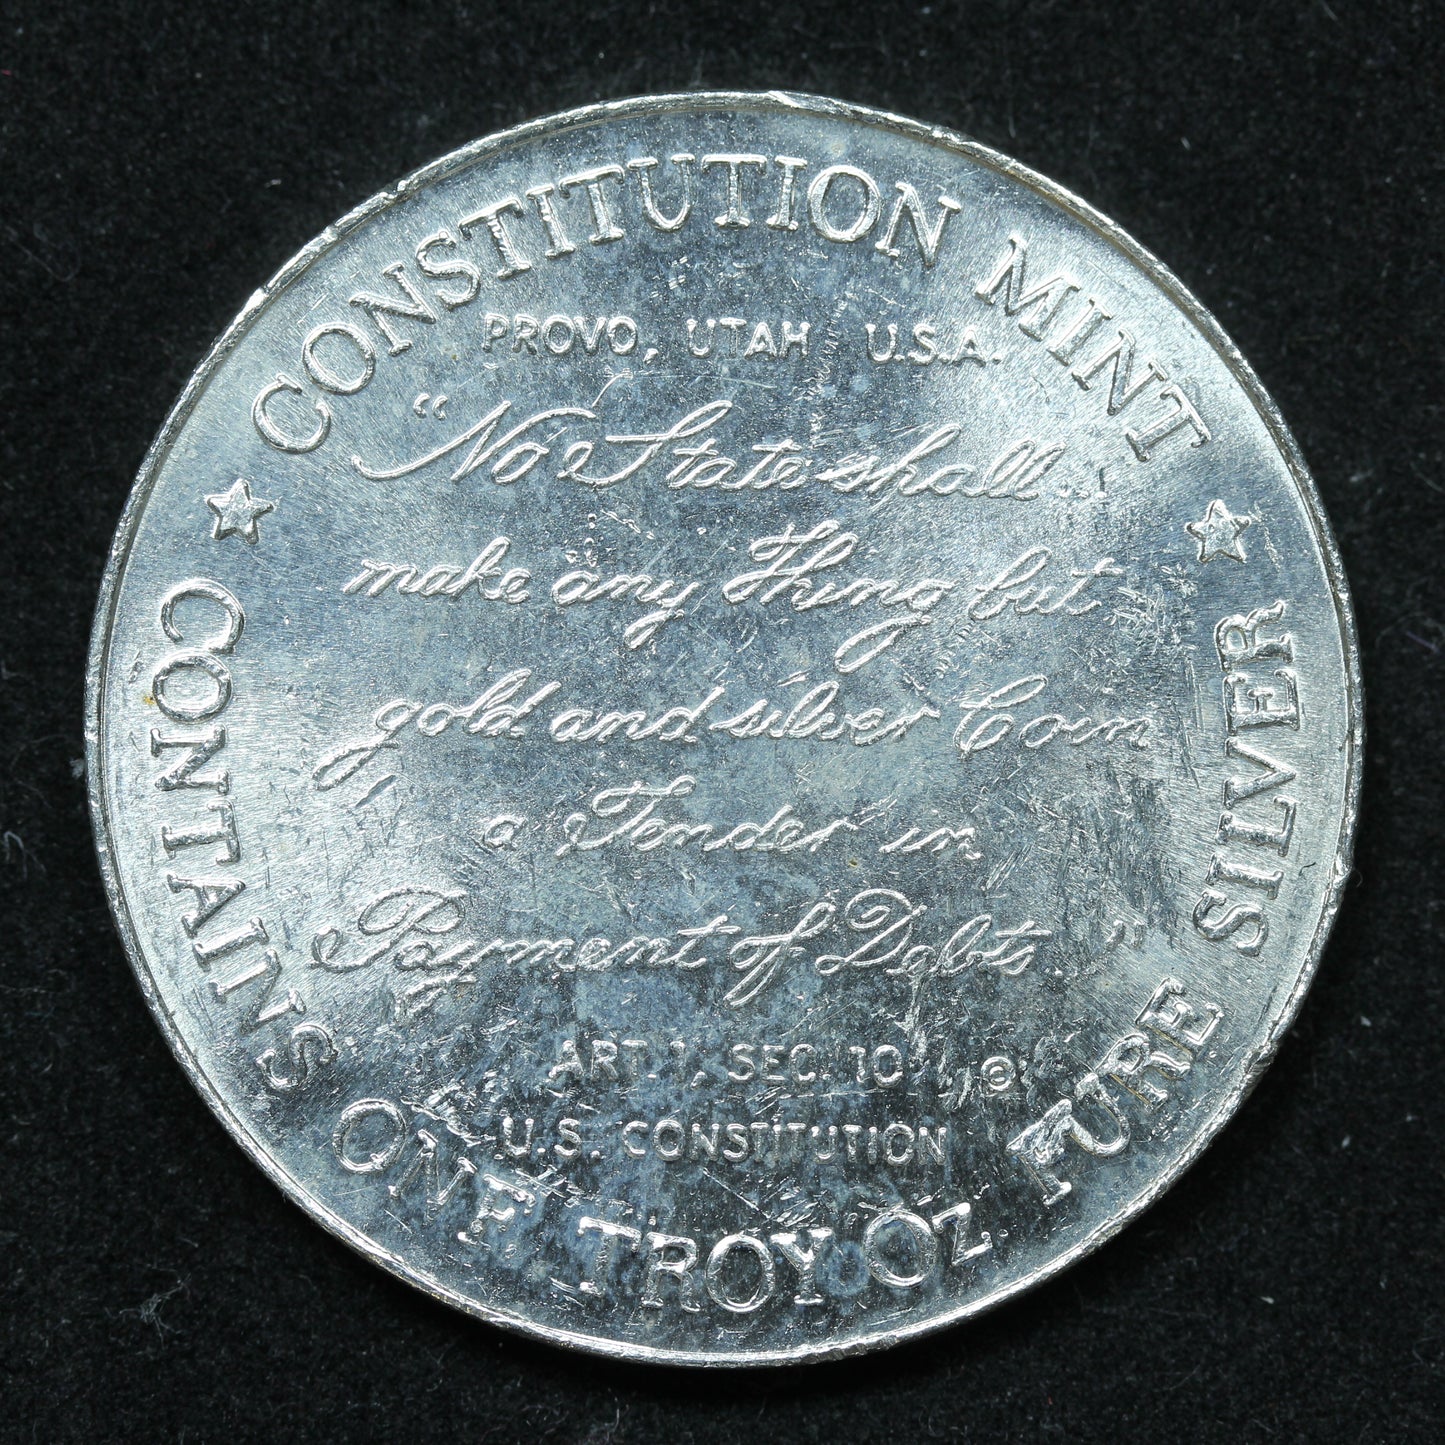 1 oz .999 Fine Silver Round Honest Value Never Fails Constitution Mint